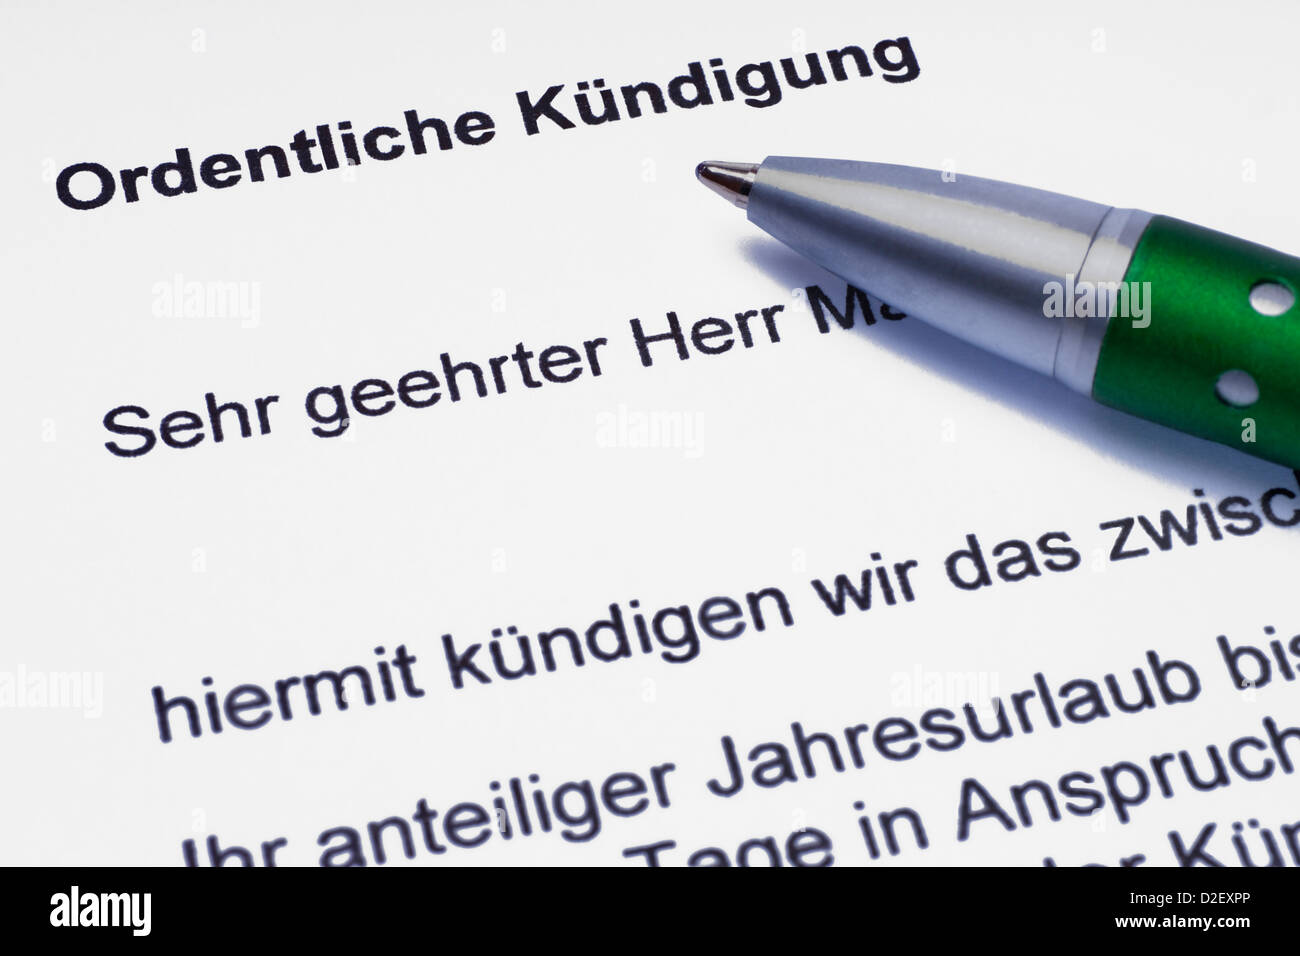 Ein Bref 'Ordentliche Kündigung', ein Stift liegt dabei | une lettre de licenciement 'ordinaire', un stylo est à côté Banque D'Images